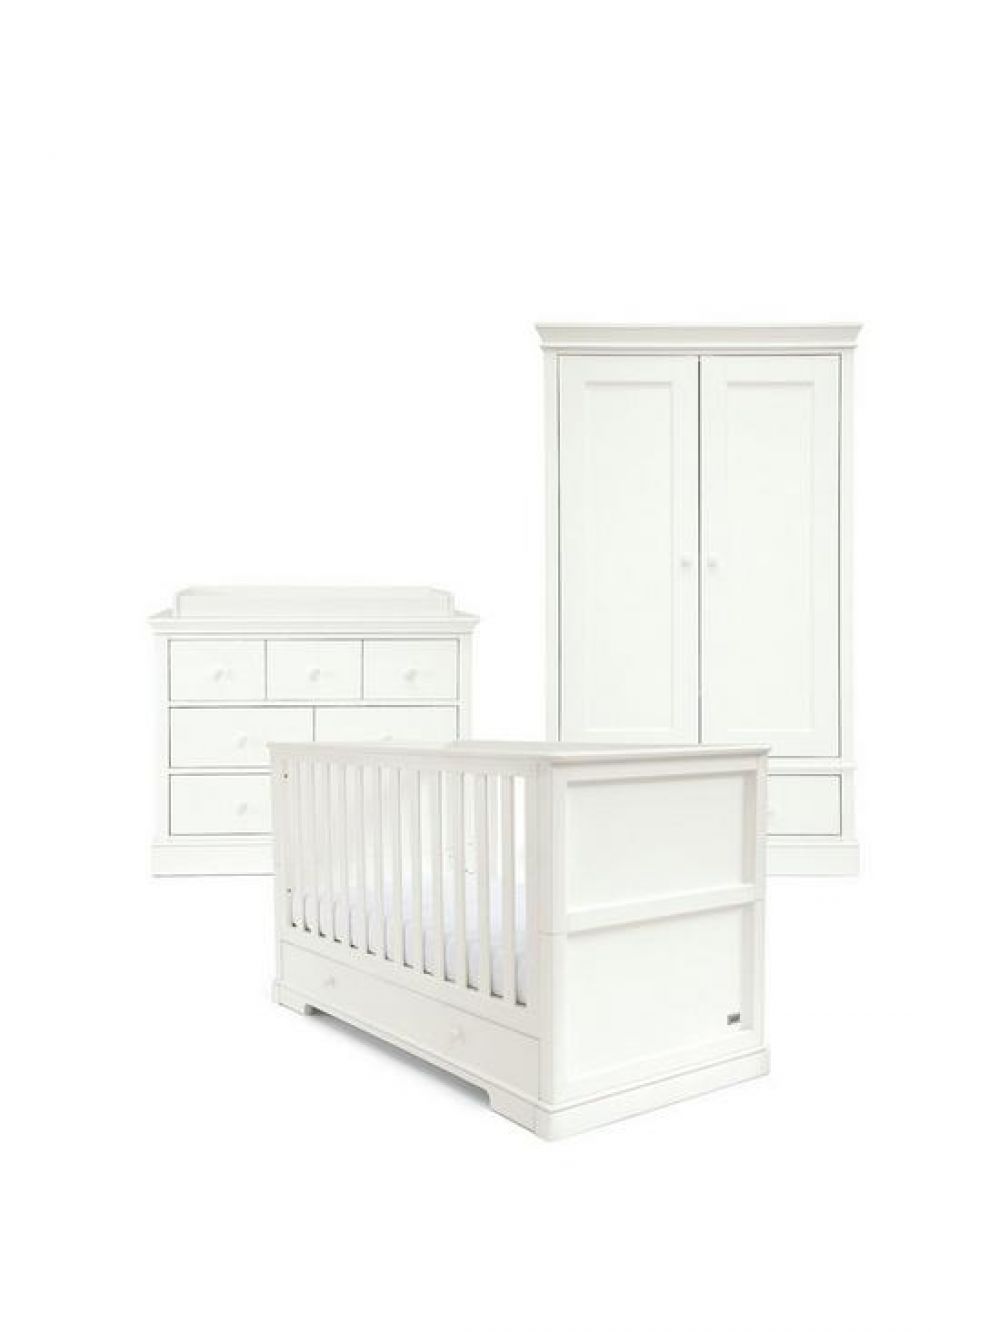 MAMAS & PAPAS Oxford Furniture Range "White" FREE Deluxe Spring Mattress